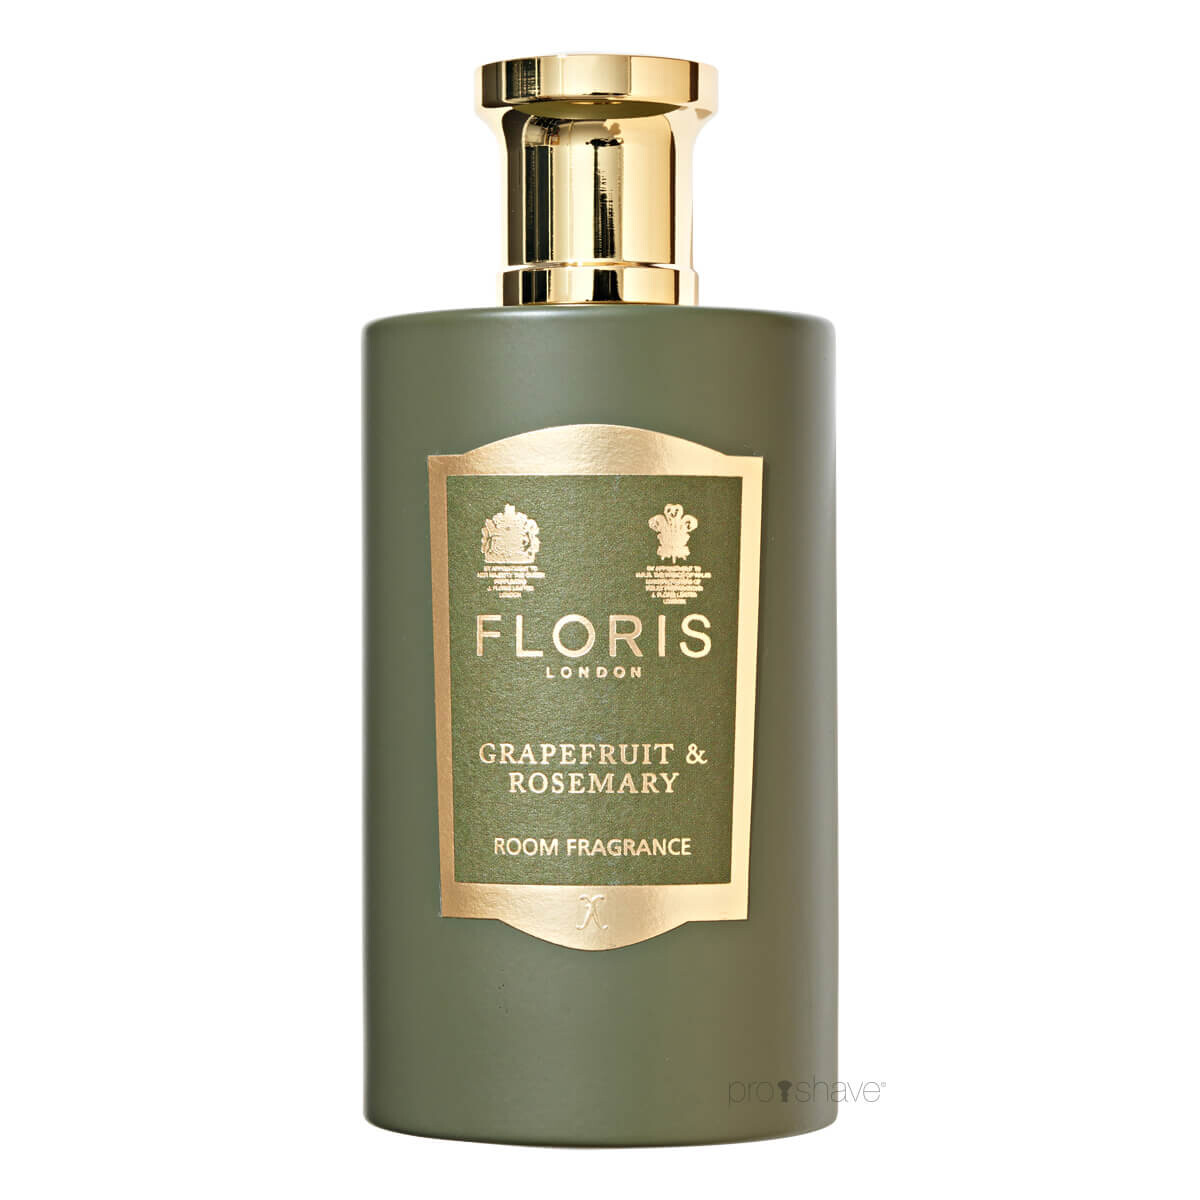 Floris Grapefrugt & Rosmarin Room Fragrance, 100 ml.